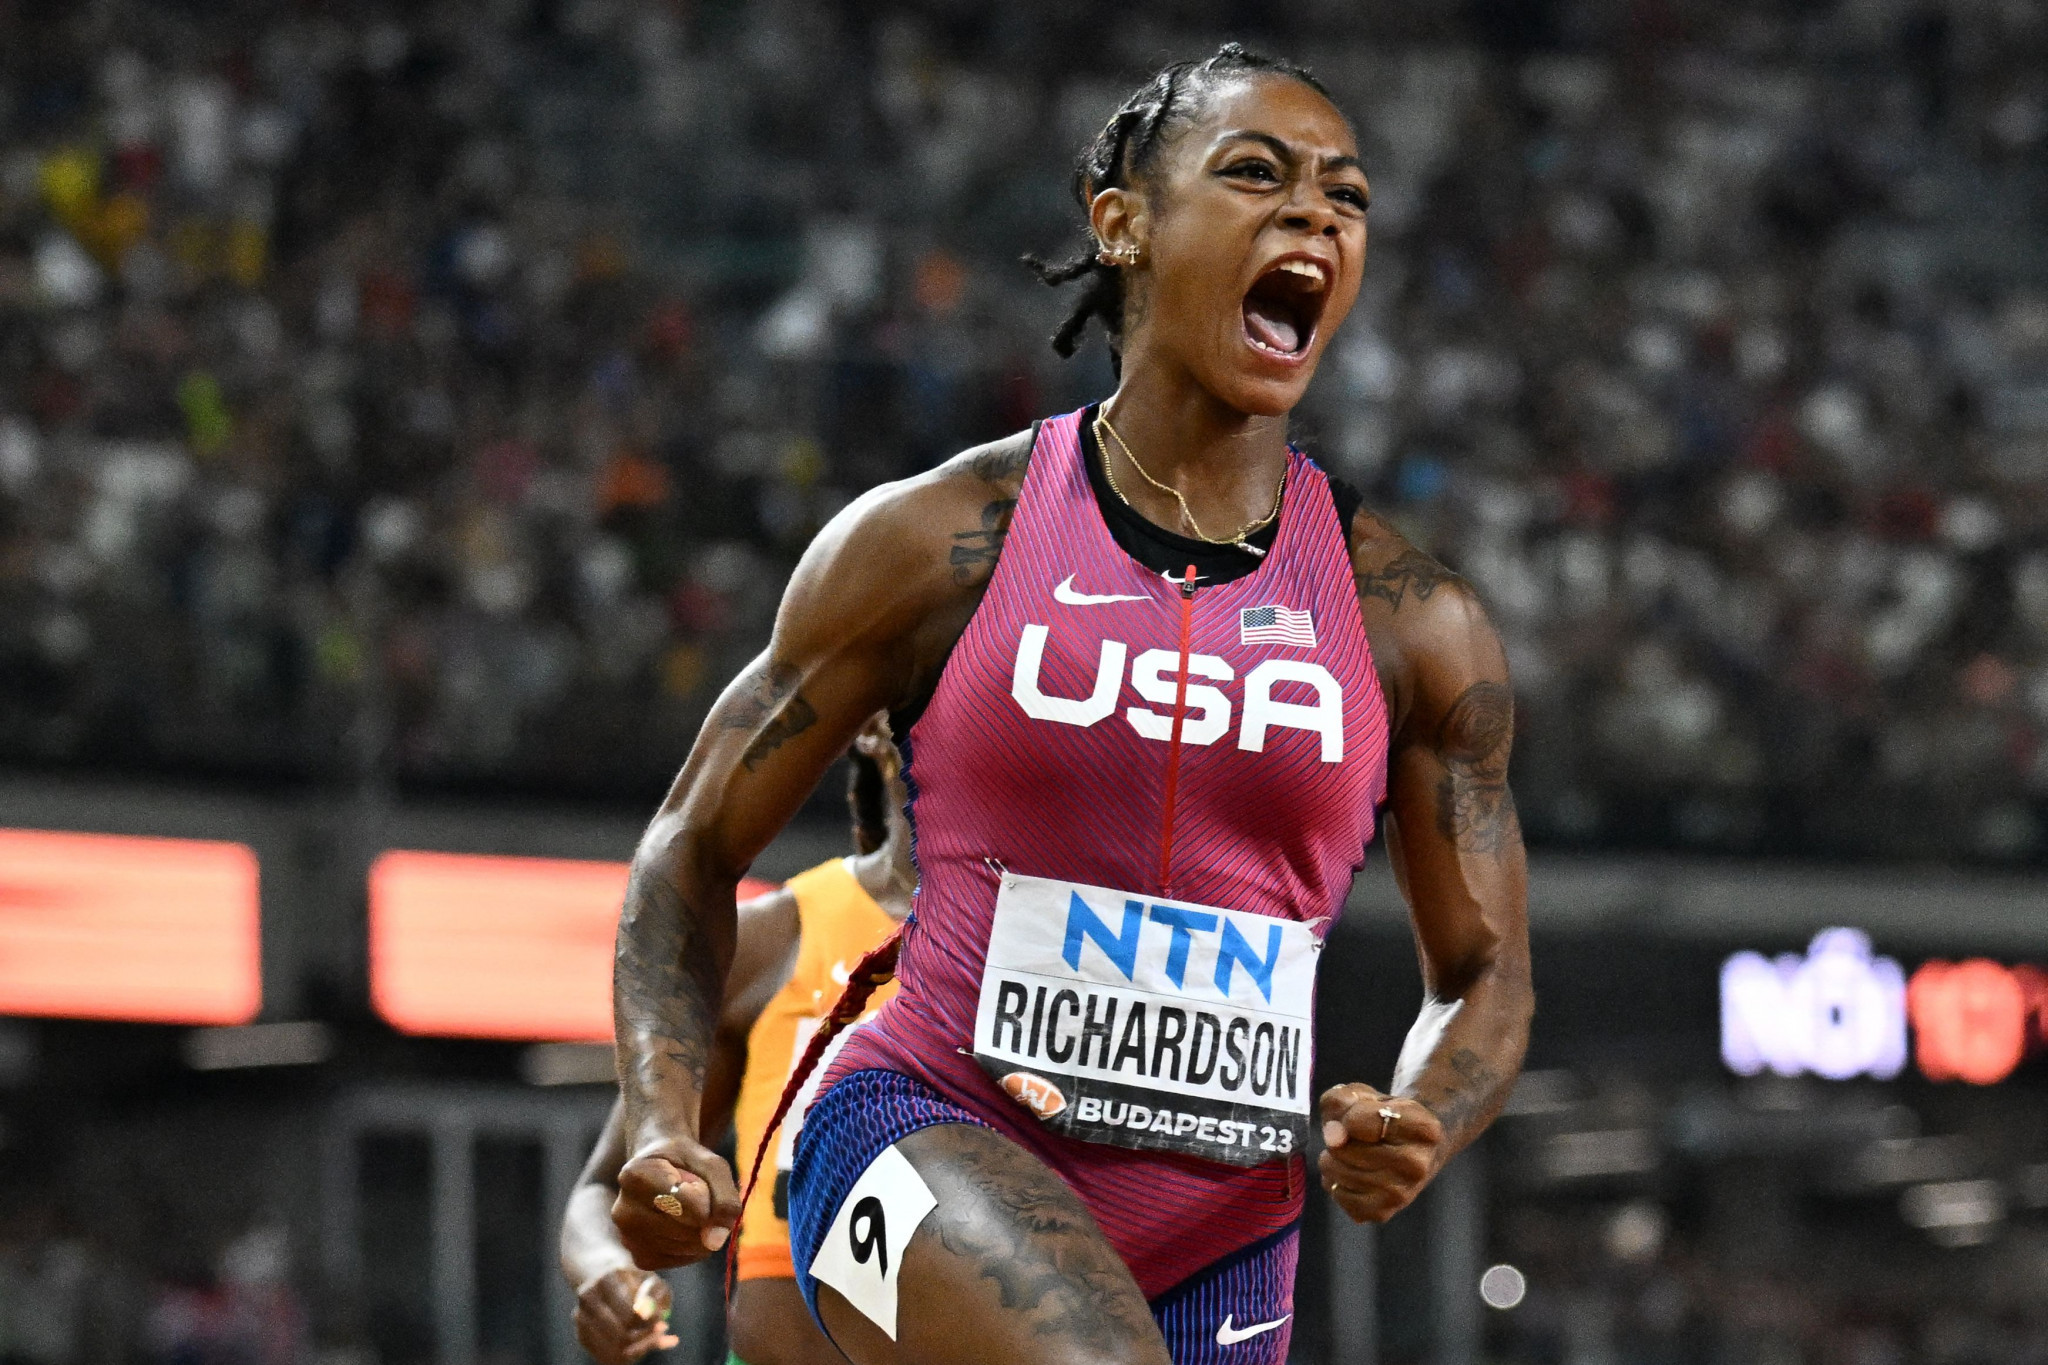 Richardson wins star-studded women's 100m final with World Athletics Championships record